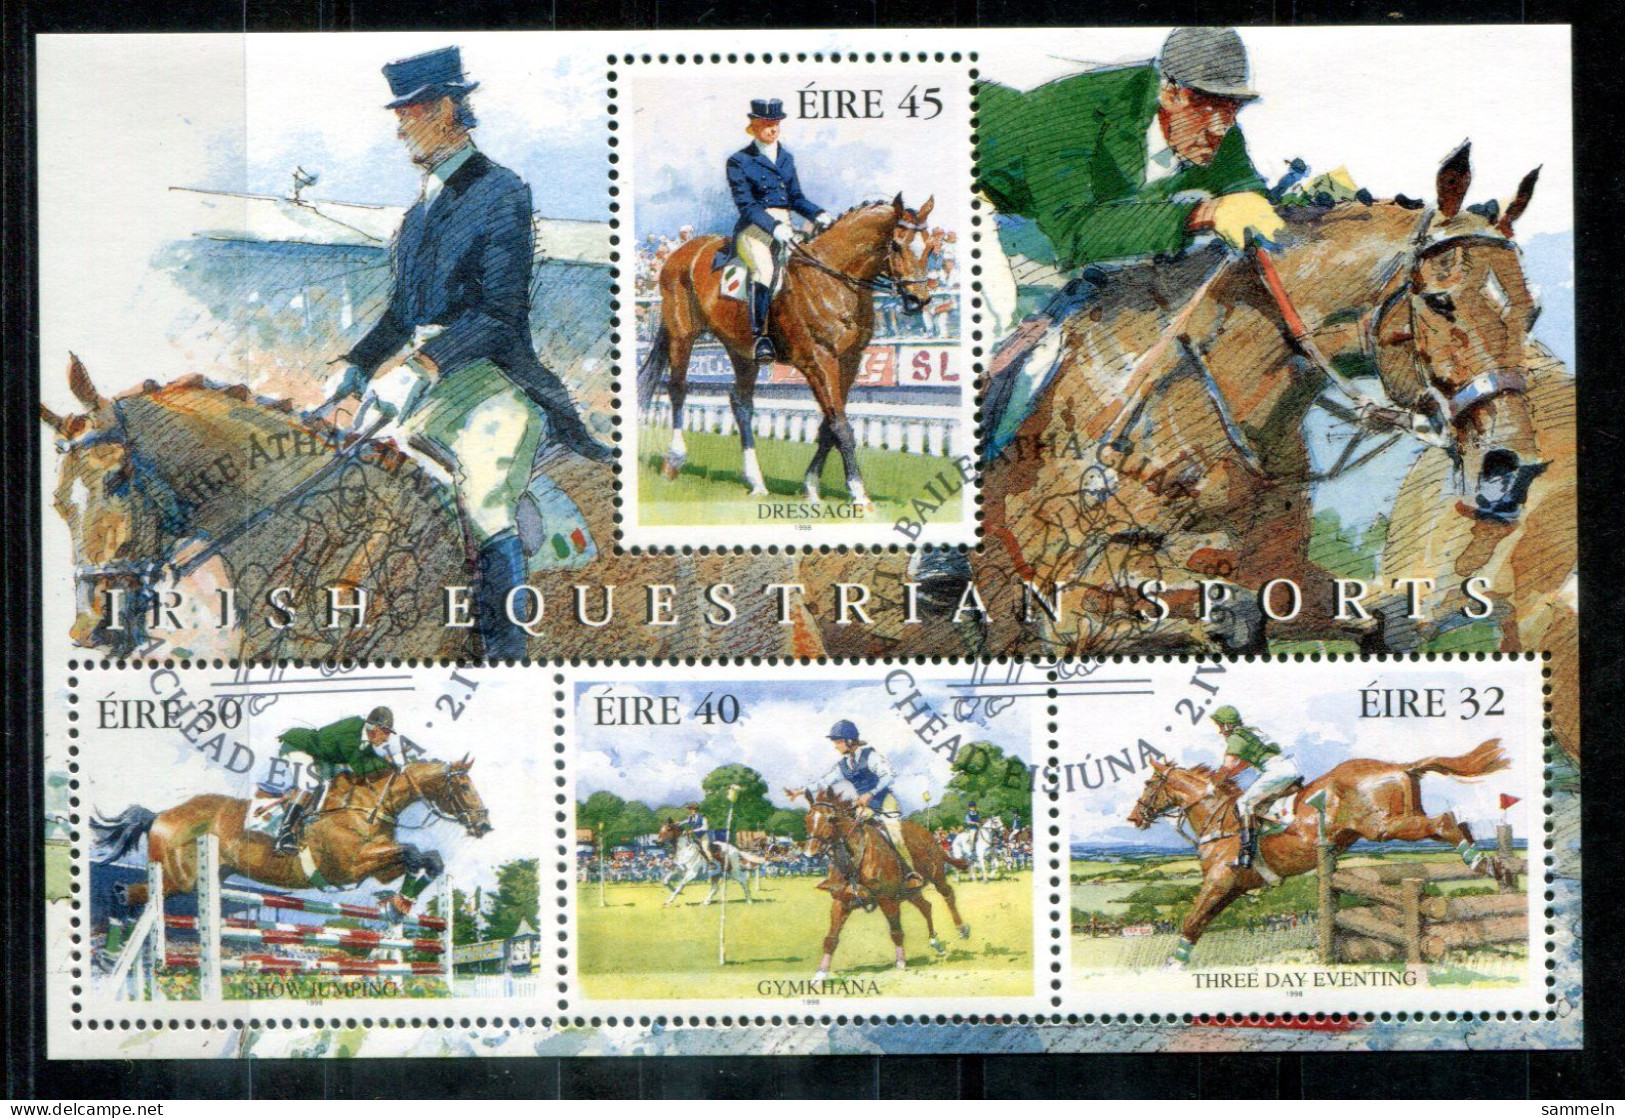 IRLAND Block 27, Bl.27 Canc. - Reitsport, Equestrian, Sport équestre, Pferd, Horse, Cheval   - IRELAND / IRLANDE - Blocchi & Foglietti